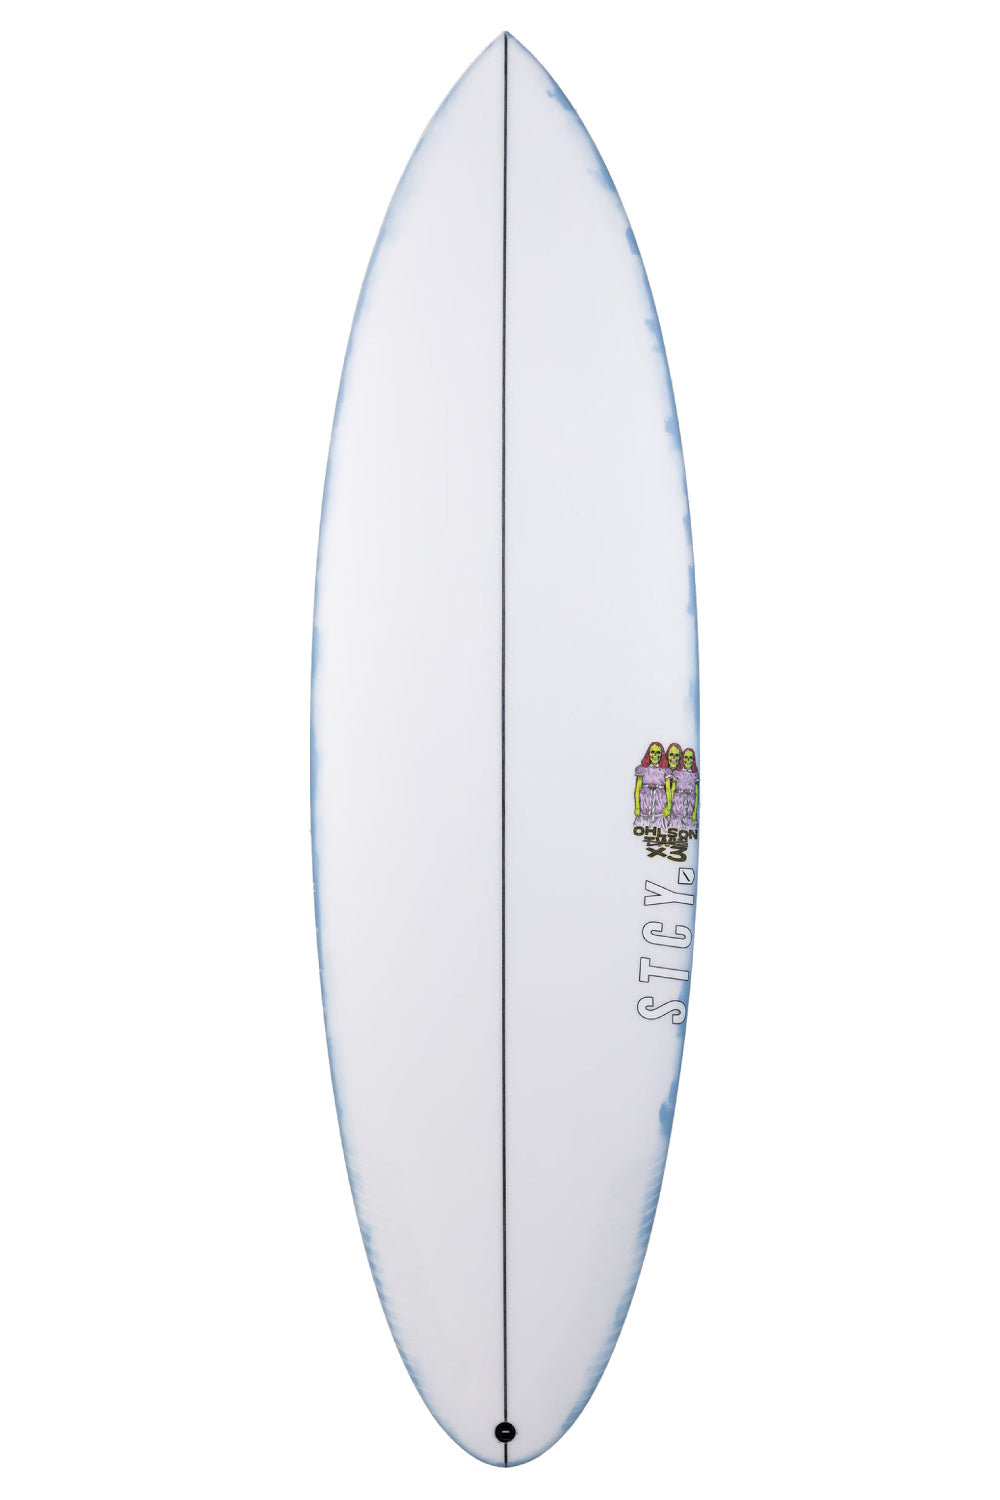 Stacey Ohlson x 3 Fins Surfboard